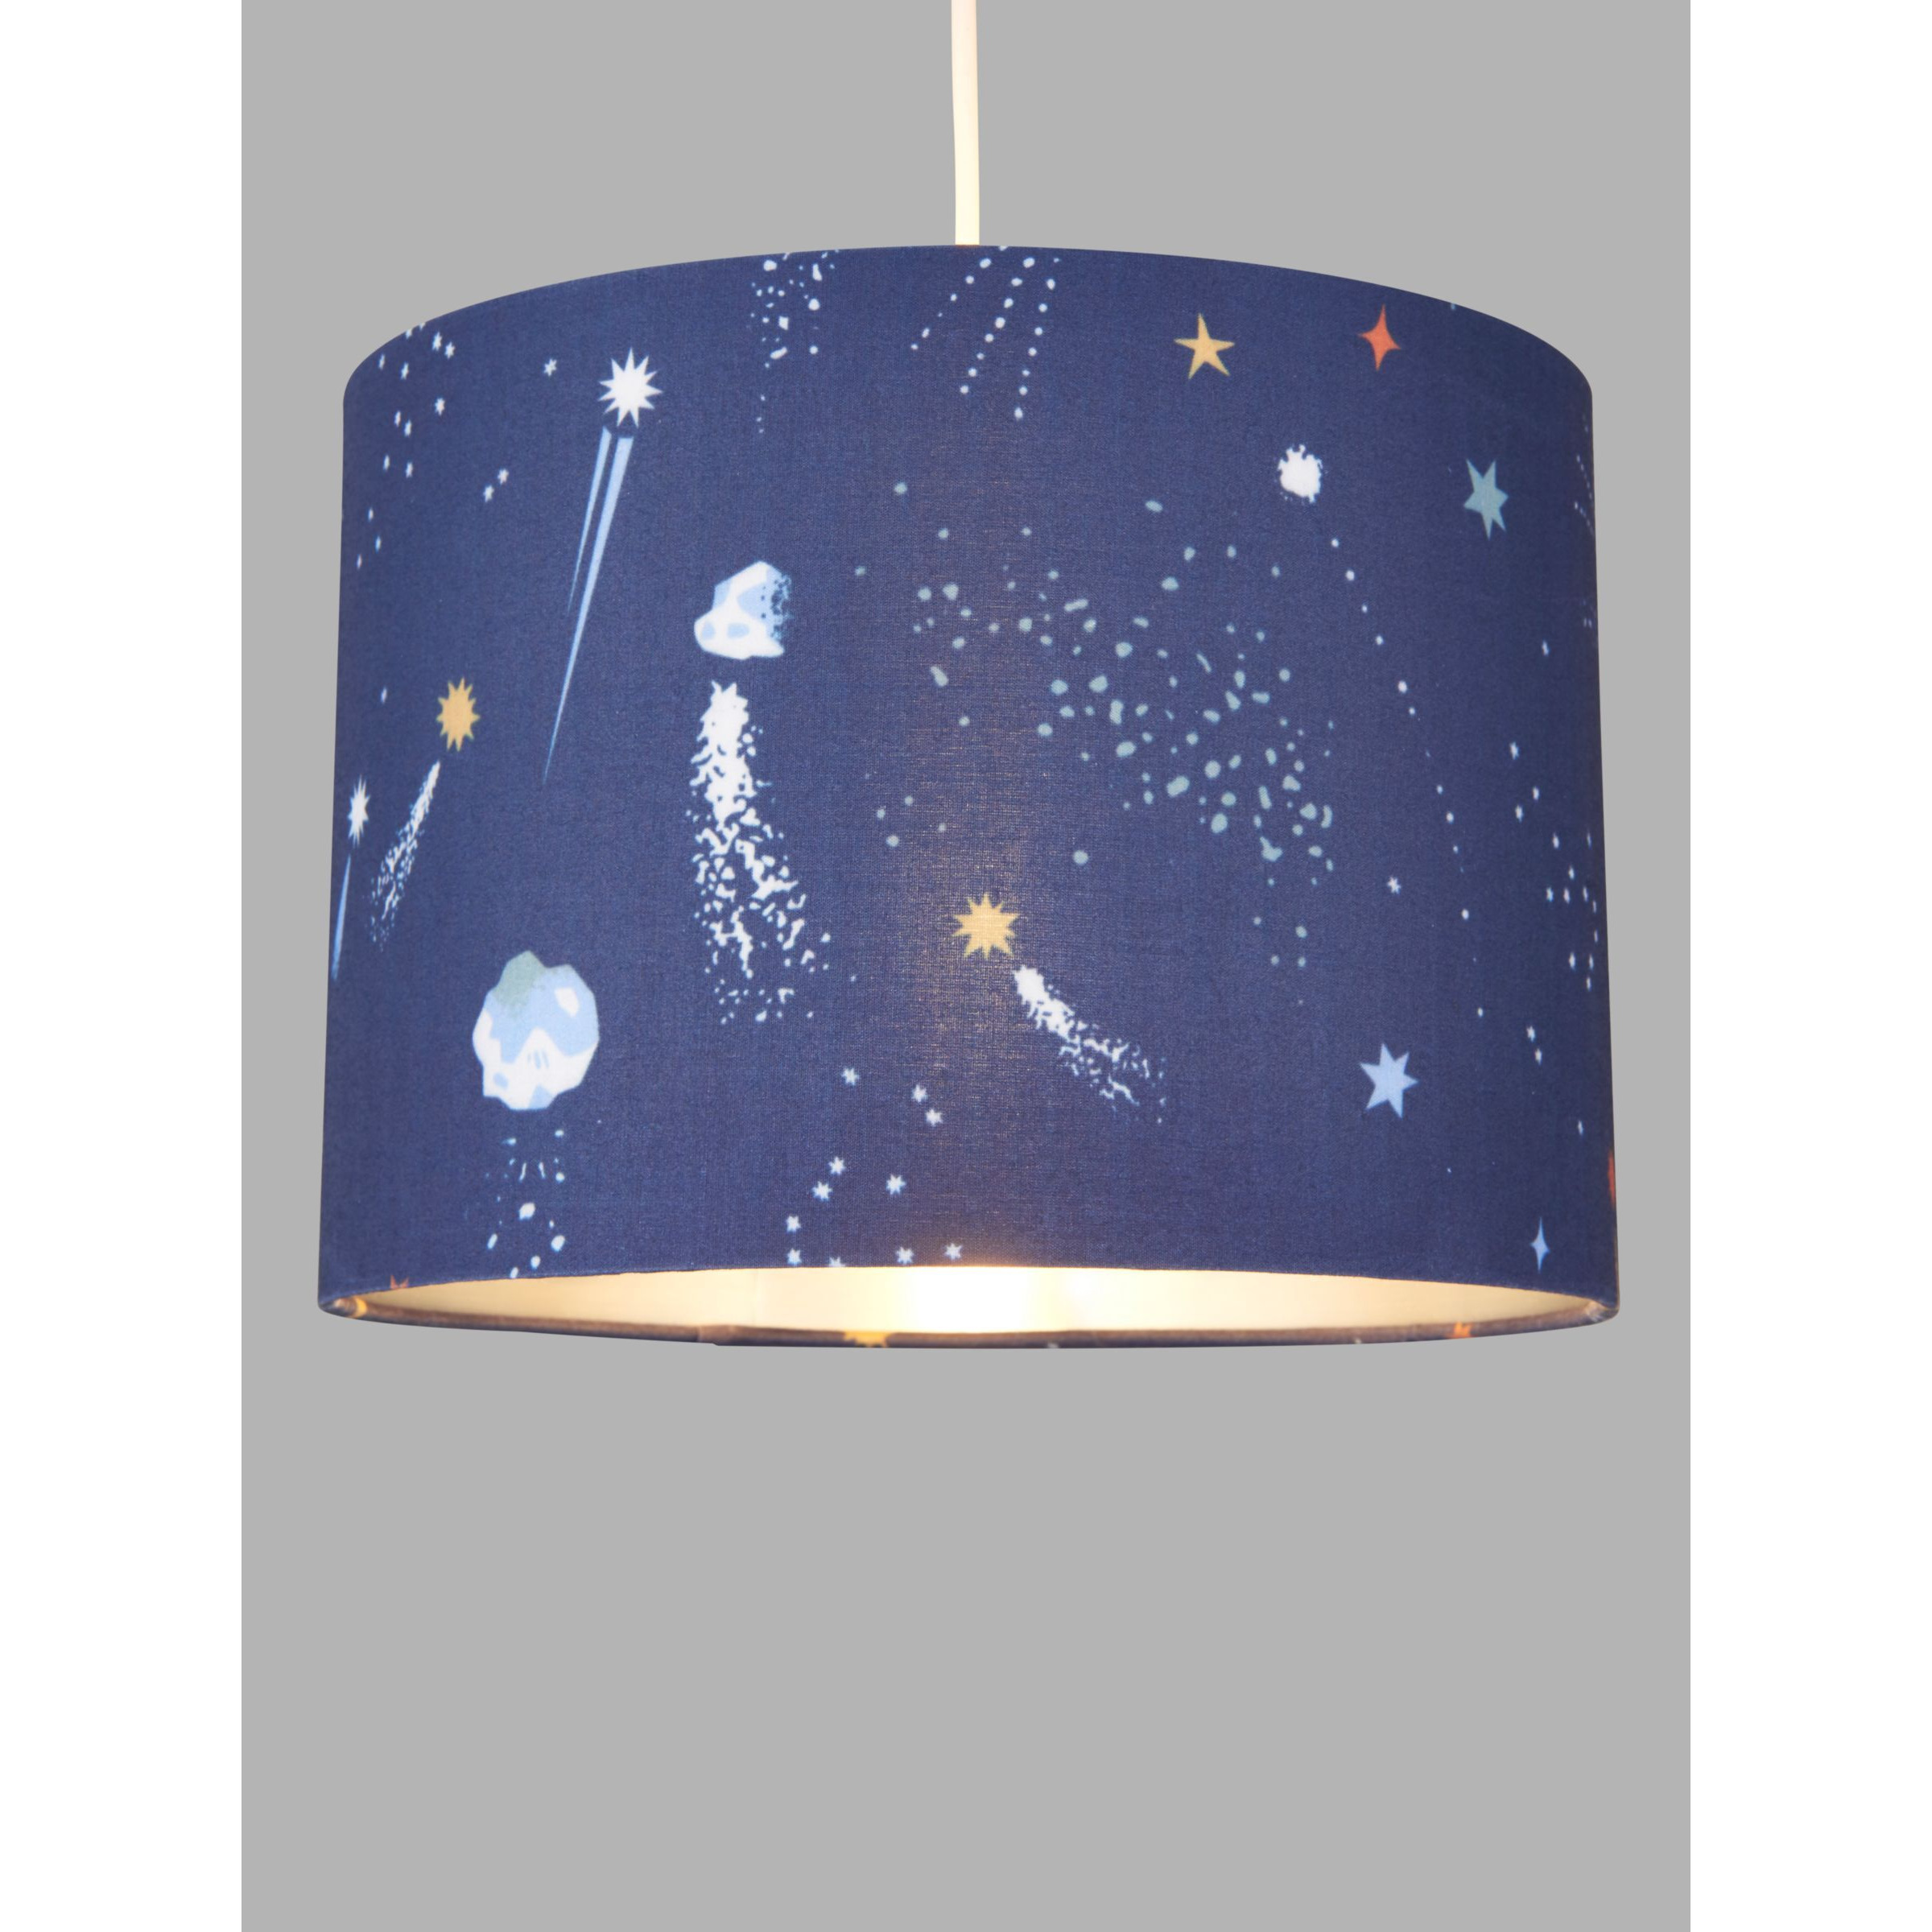 John Lewis Rockets Lamp & Ceiling Shade - image 1